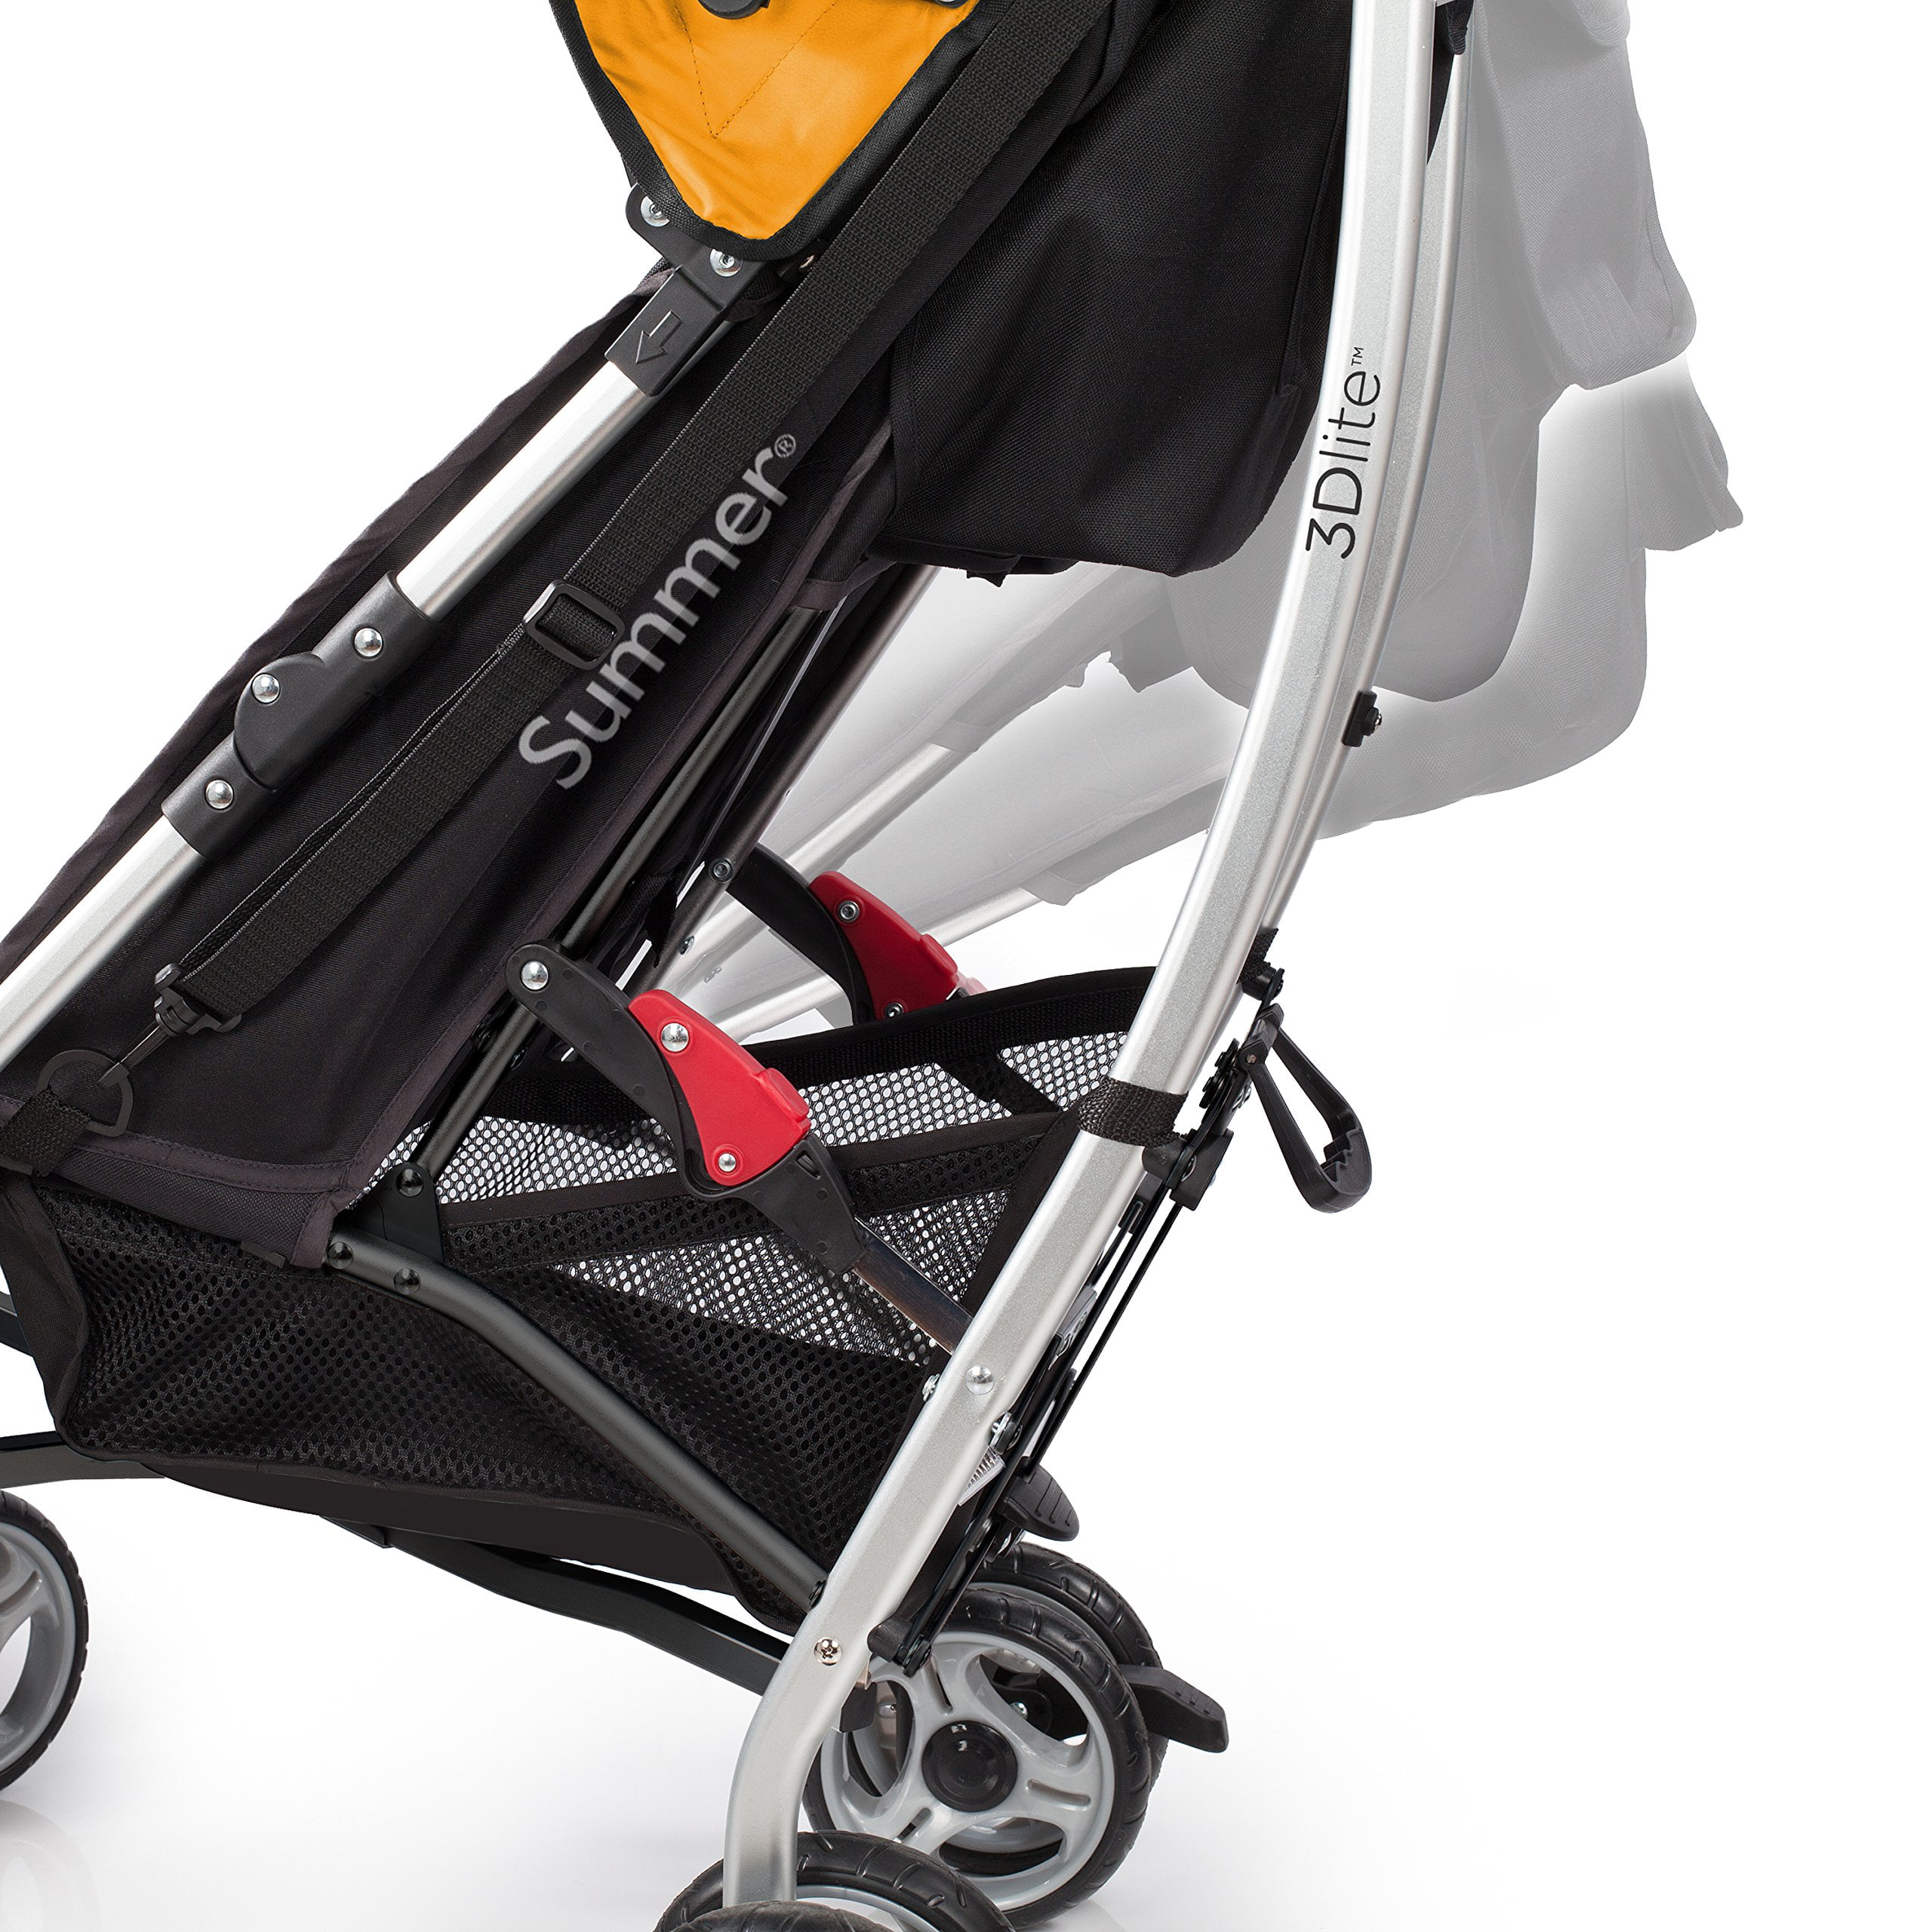 infant stroller walmart